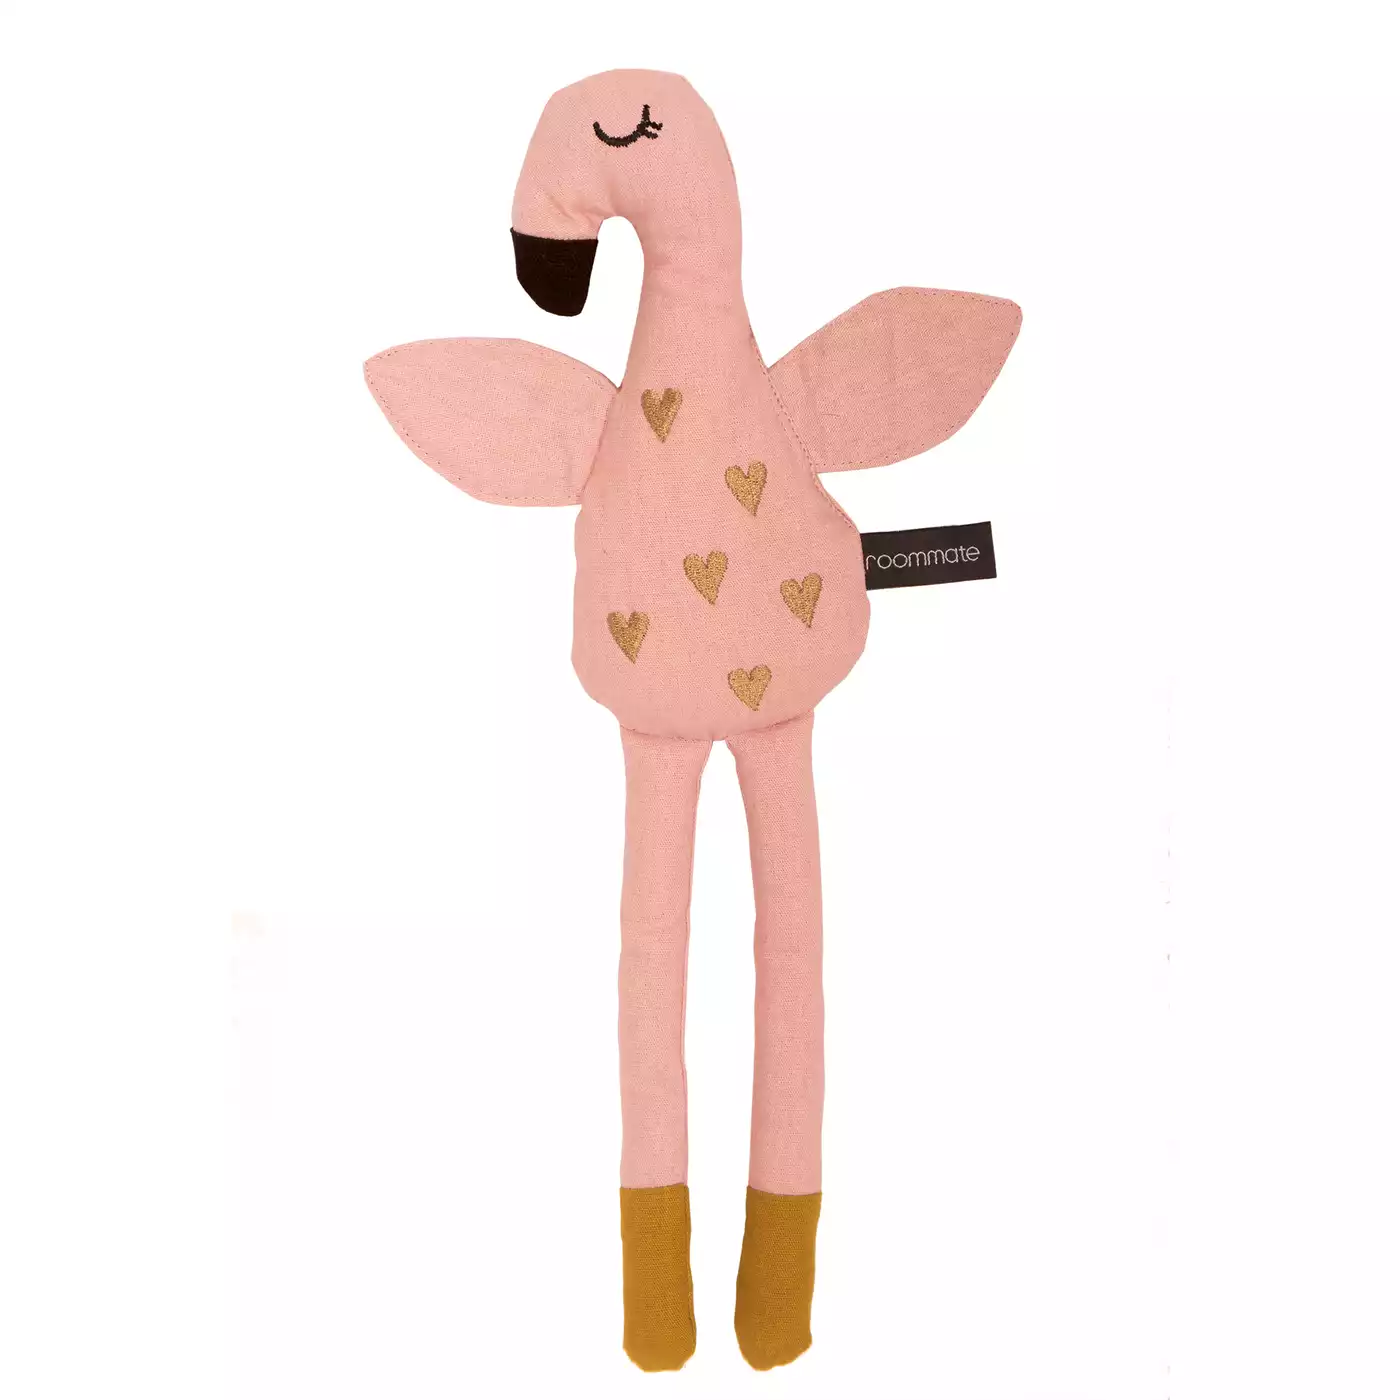 Stofftier Flamingo Roommate Pink 2000578813239 3